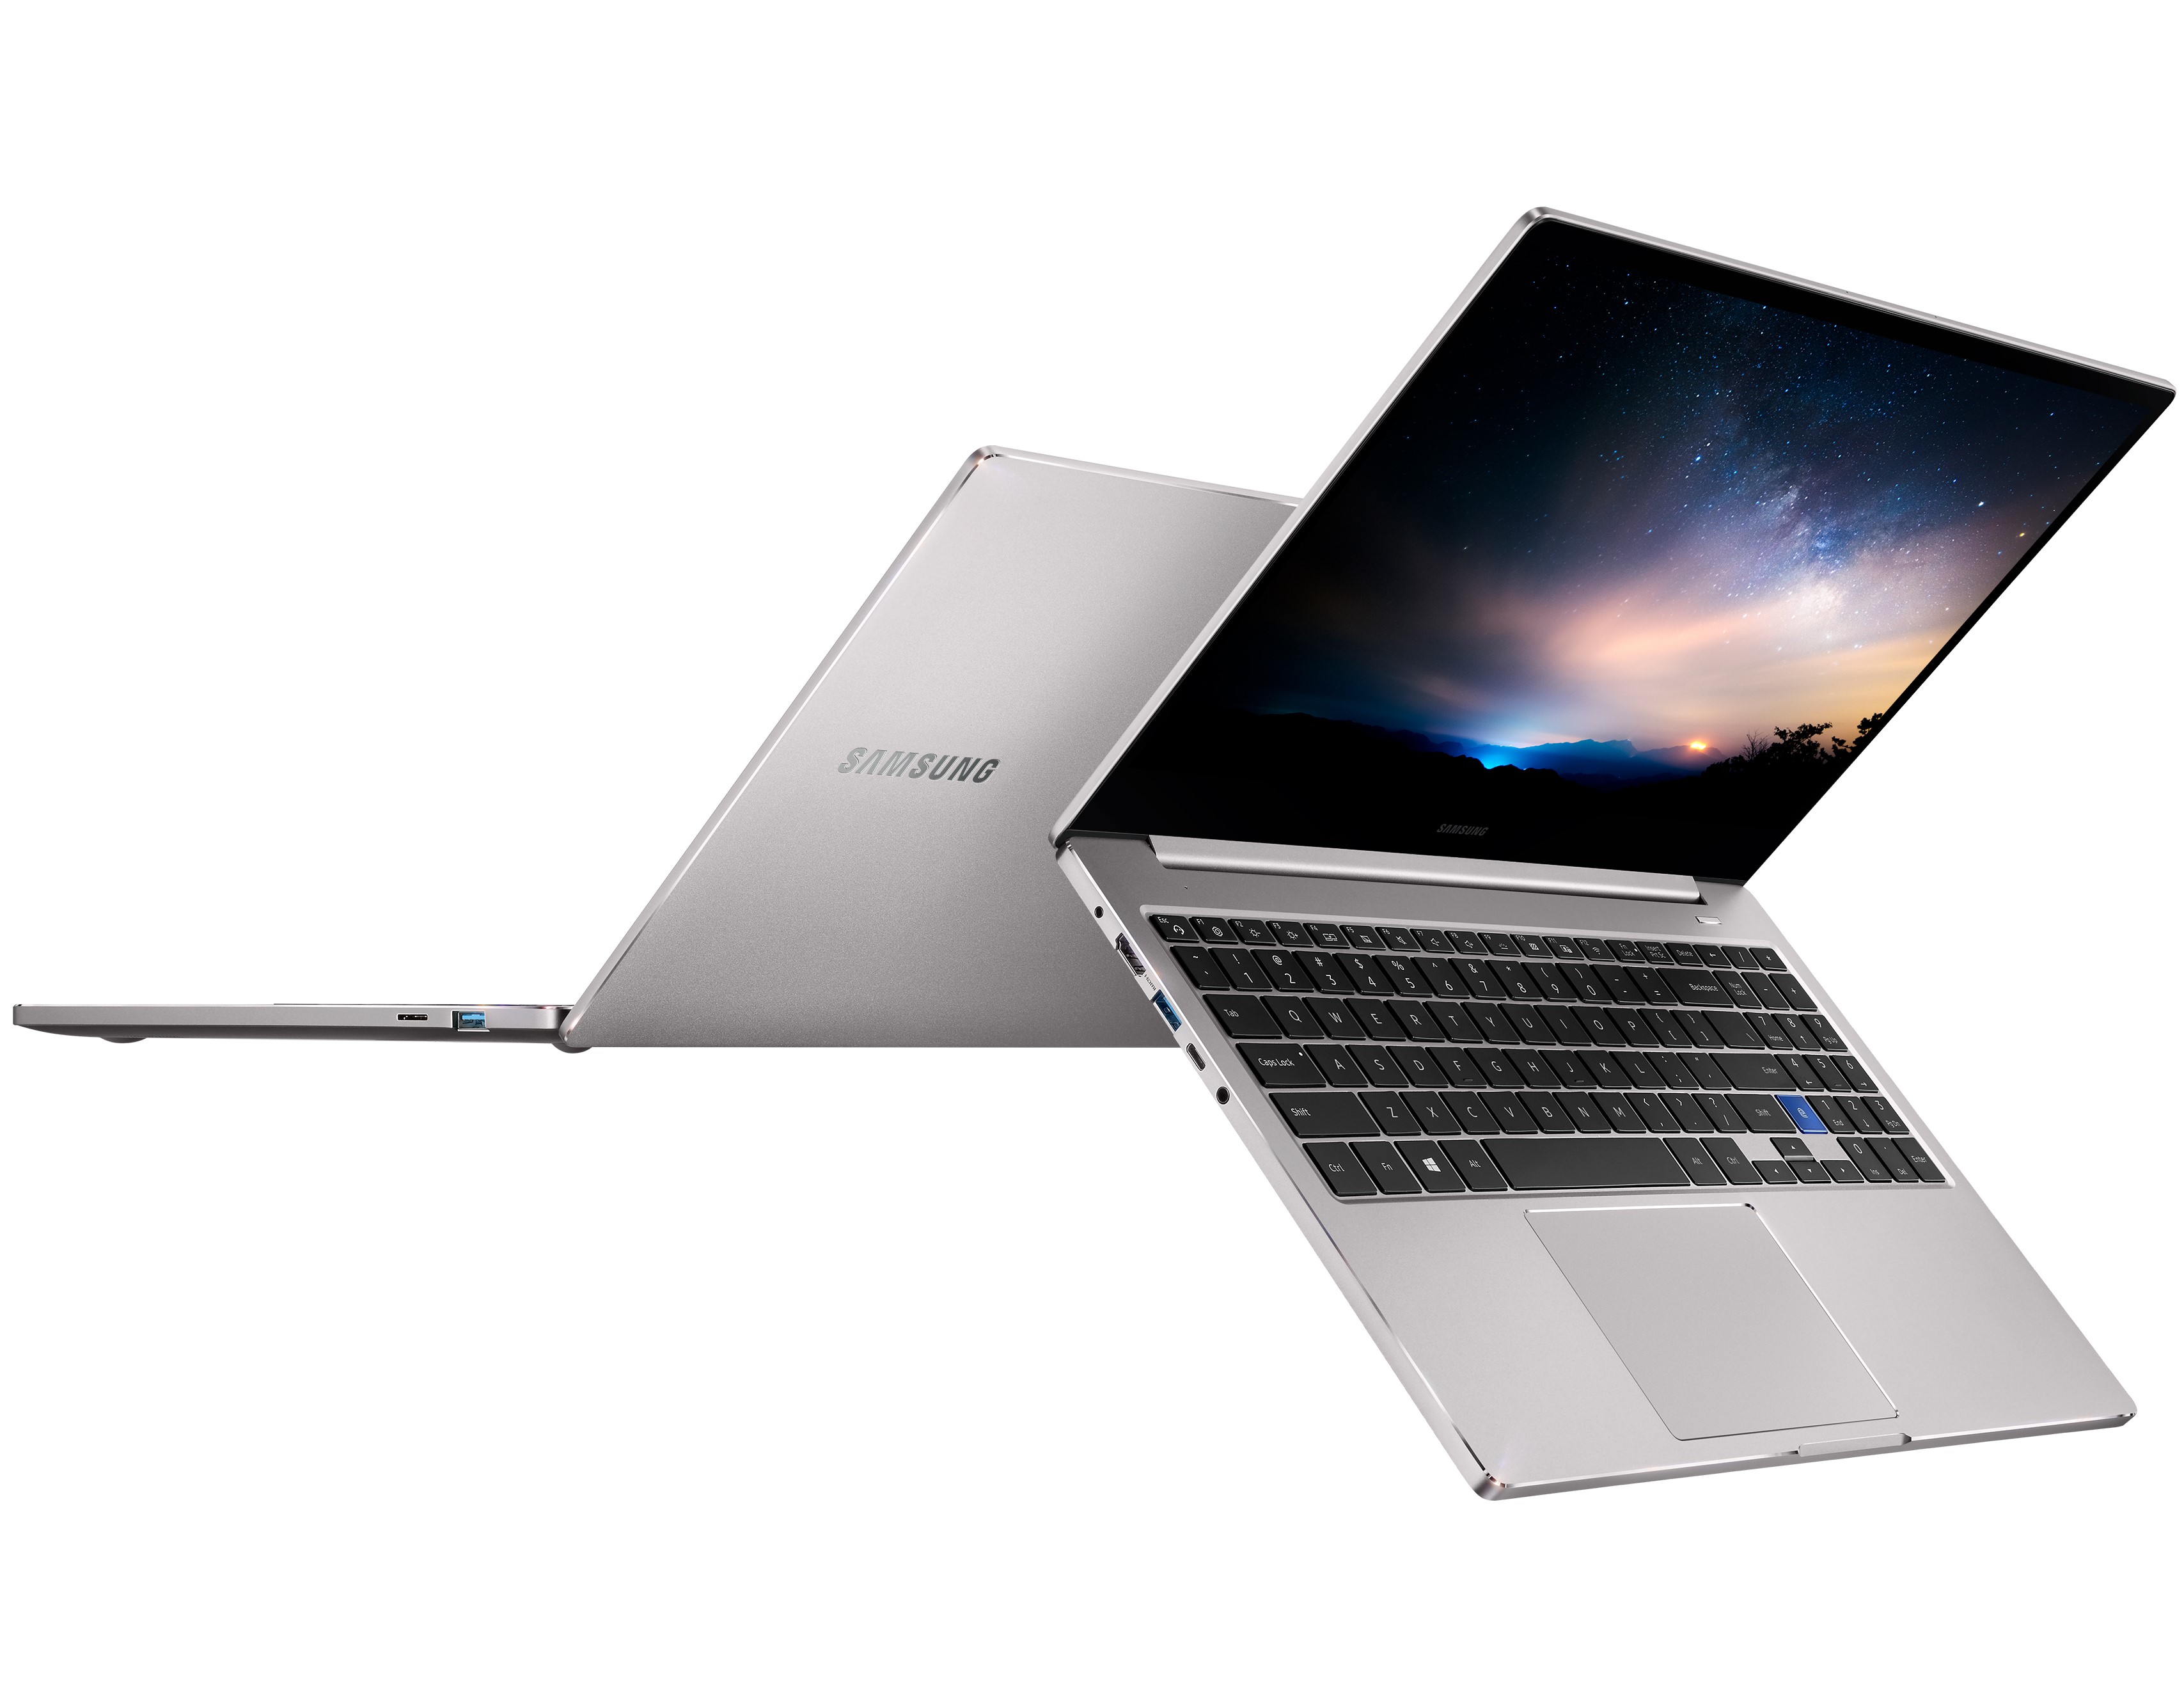 unveils new Notebook / Force laptops - NotebookCheck.net News